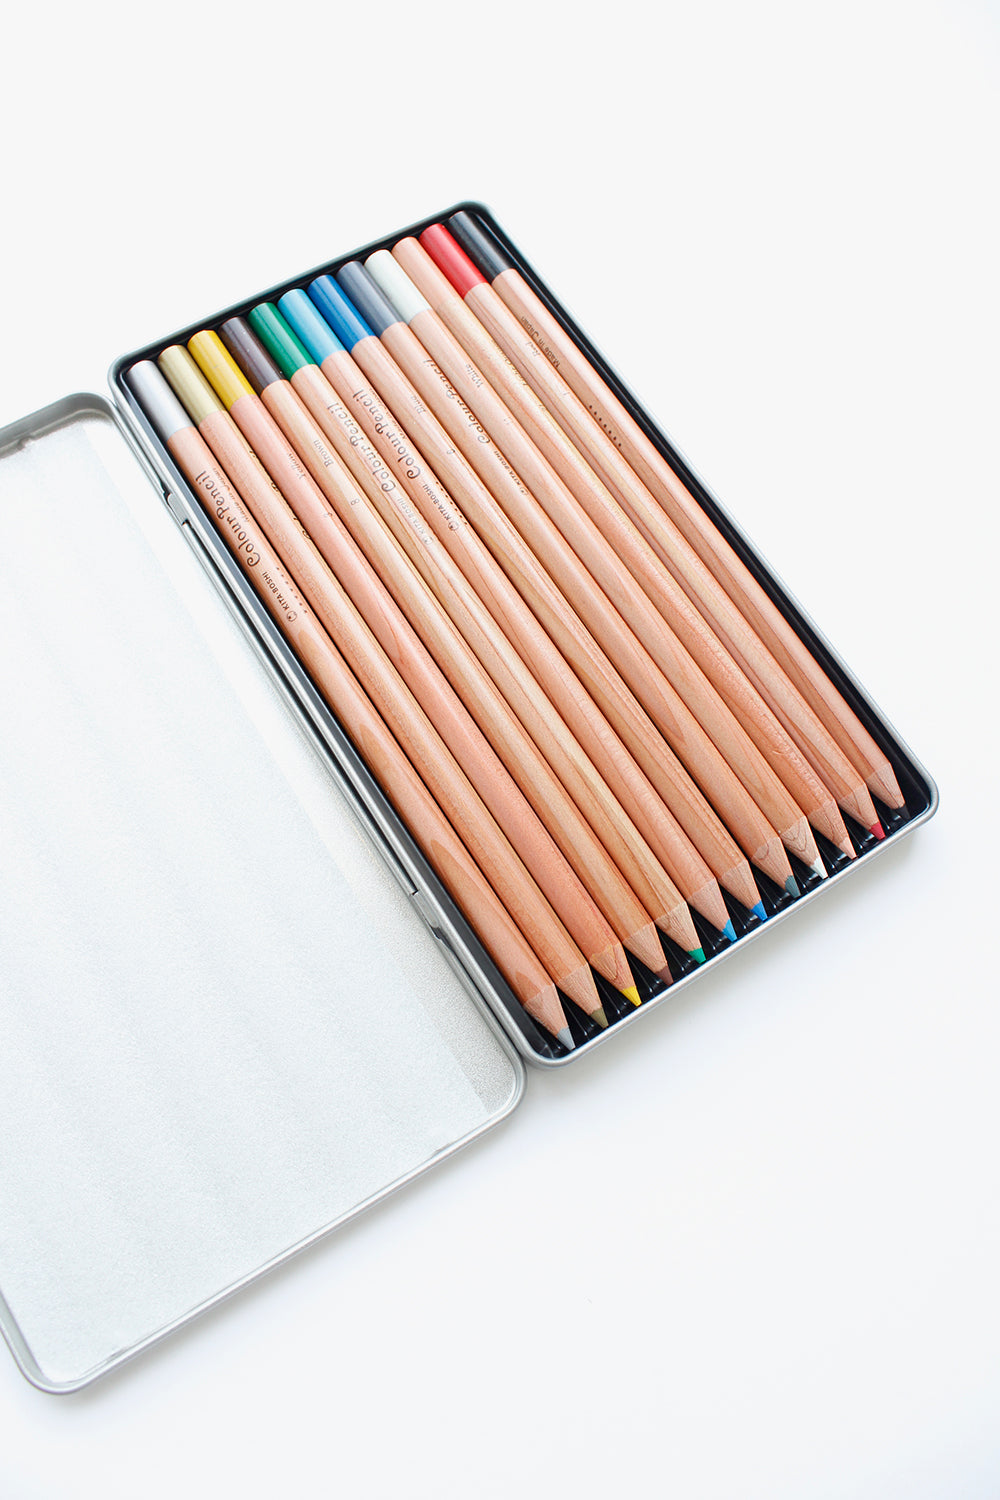 Color Pencil Set of 12 – Moth